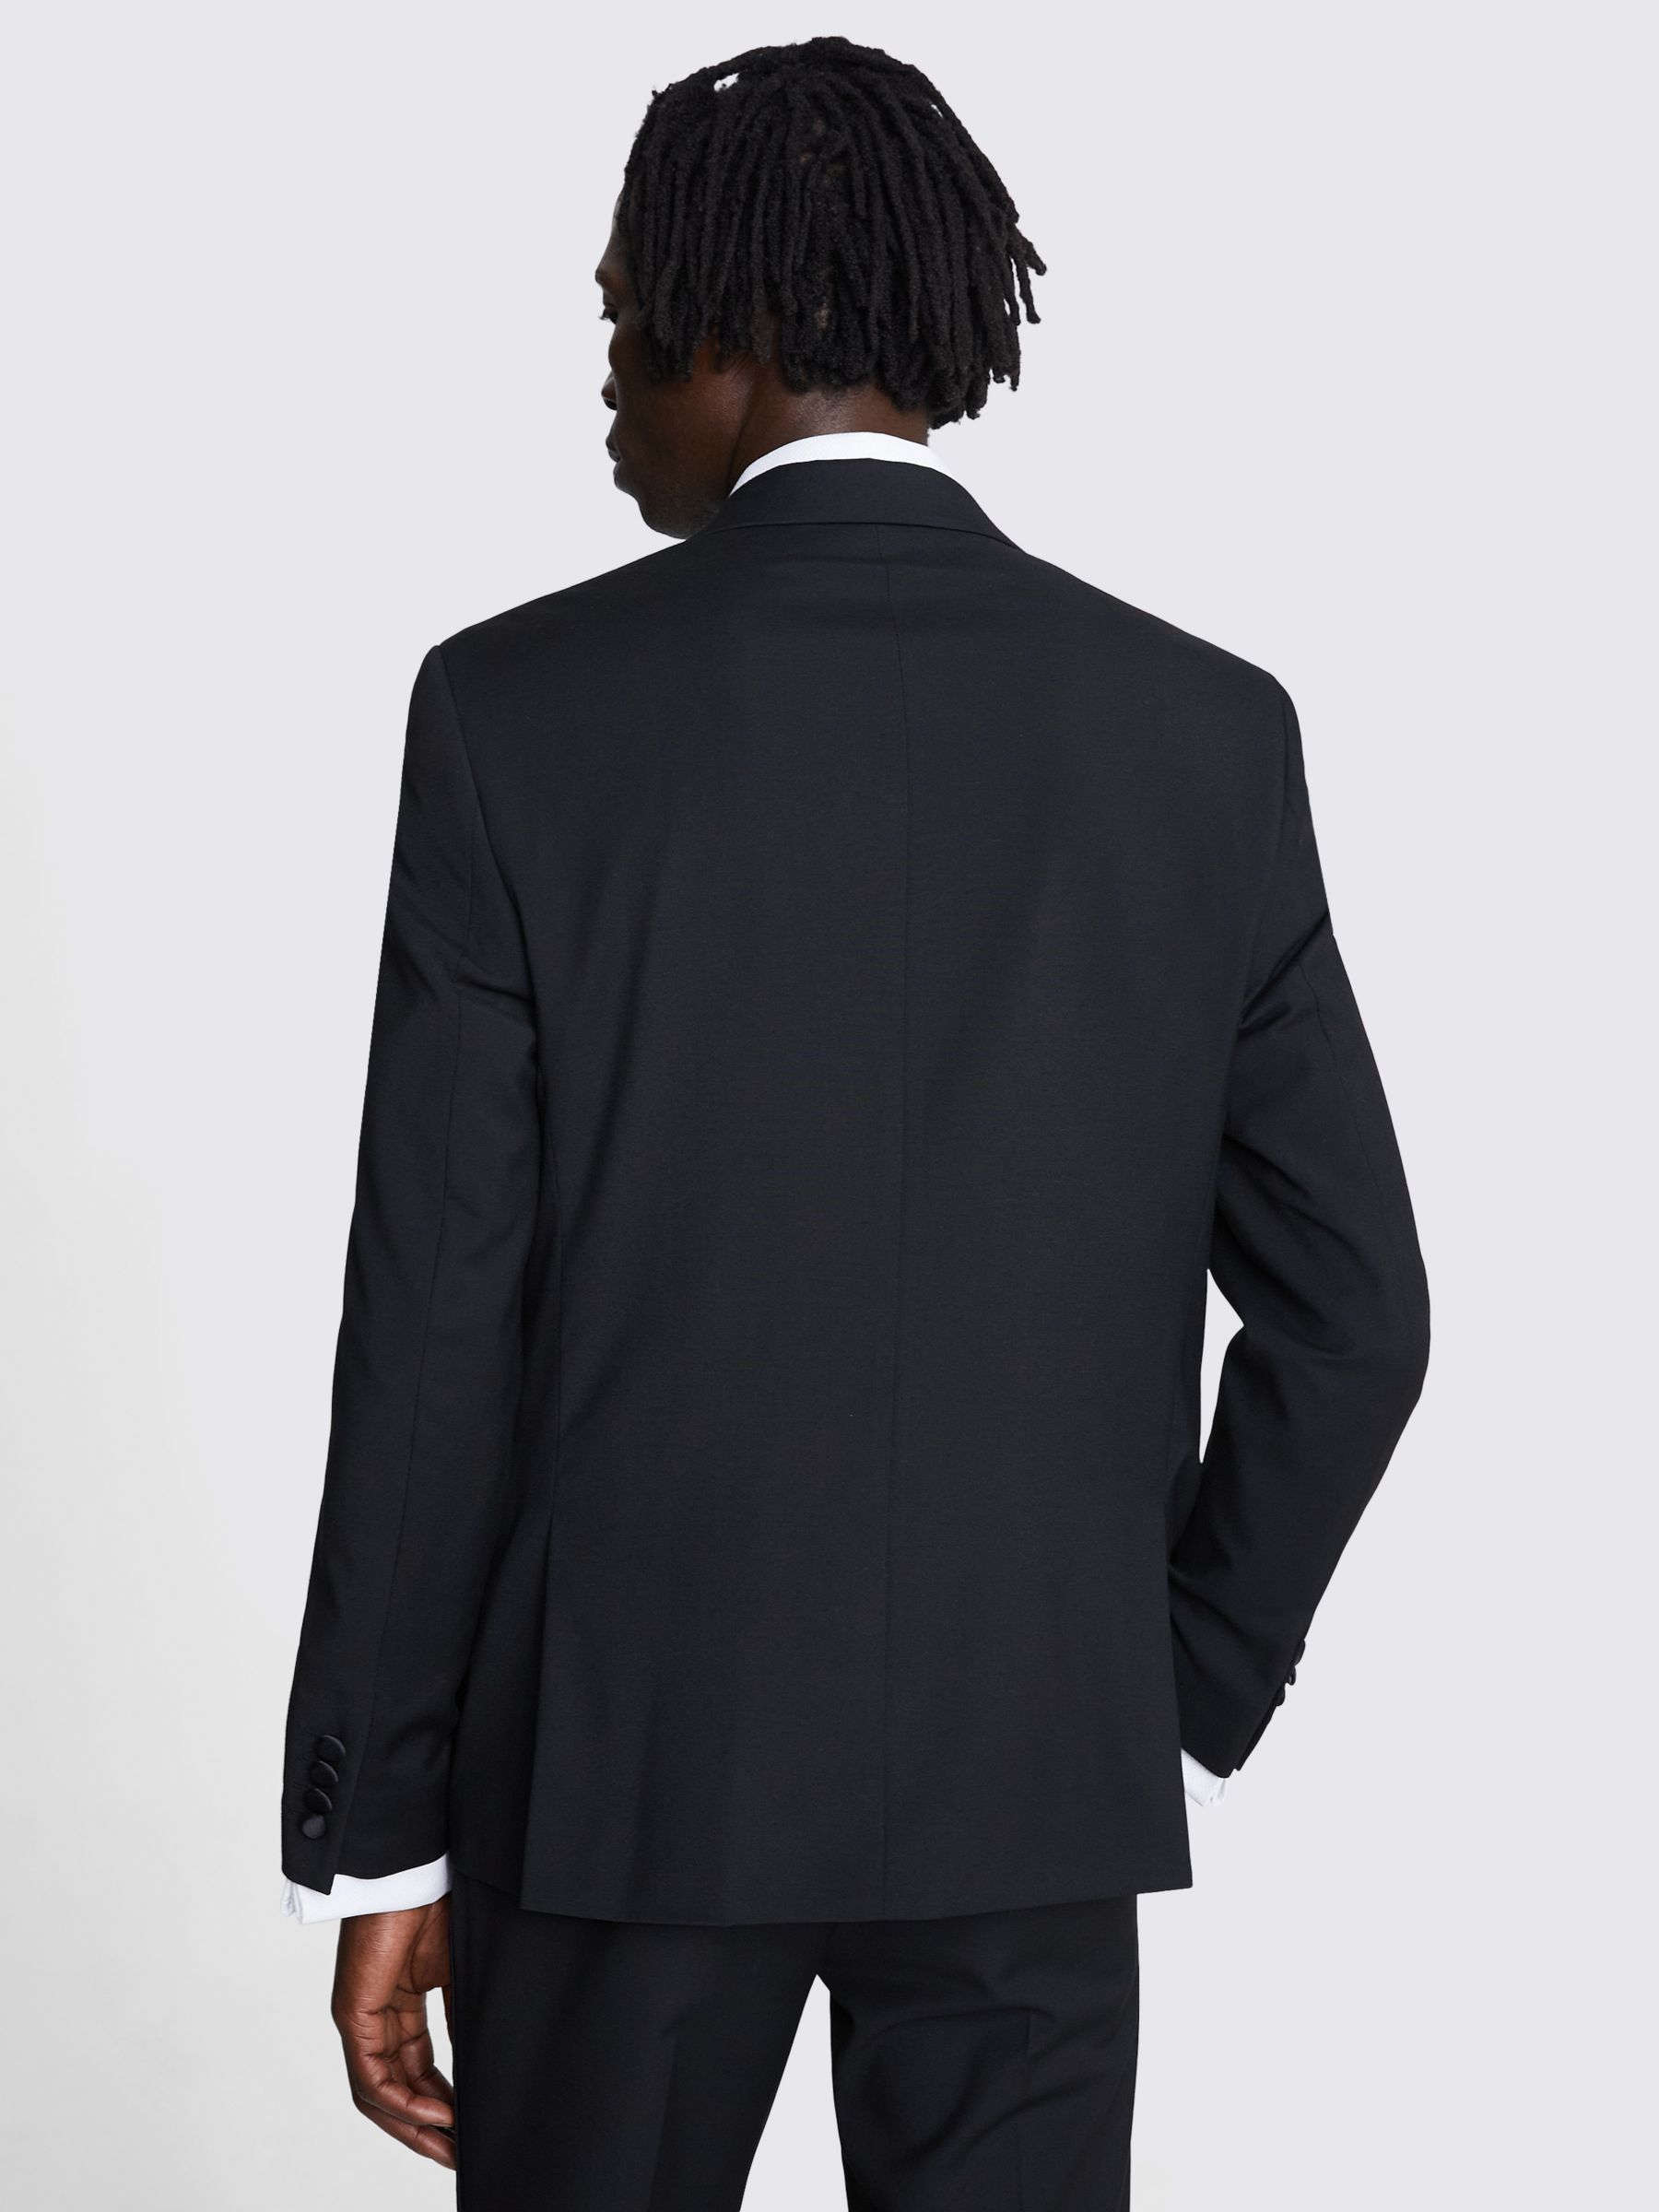 Buy Moss Slim Fit Tuxedo Jacket, Black Online at johnlewis.com